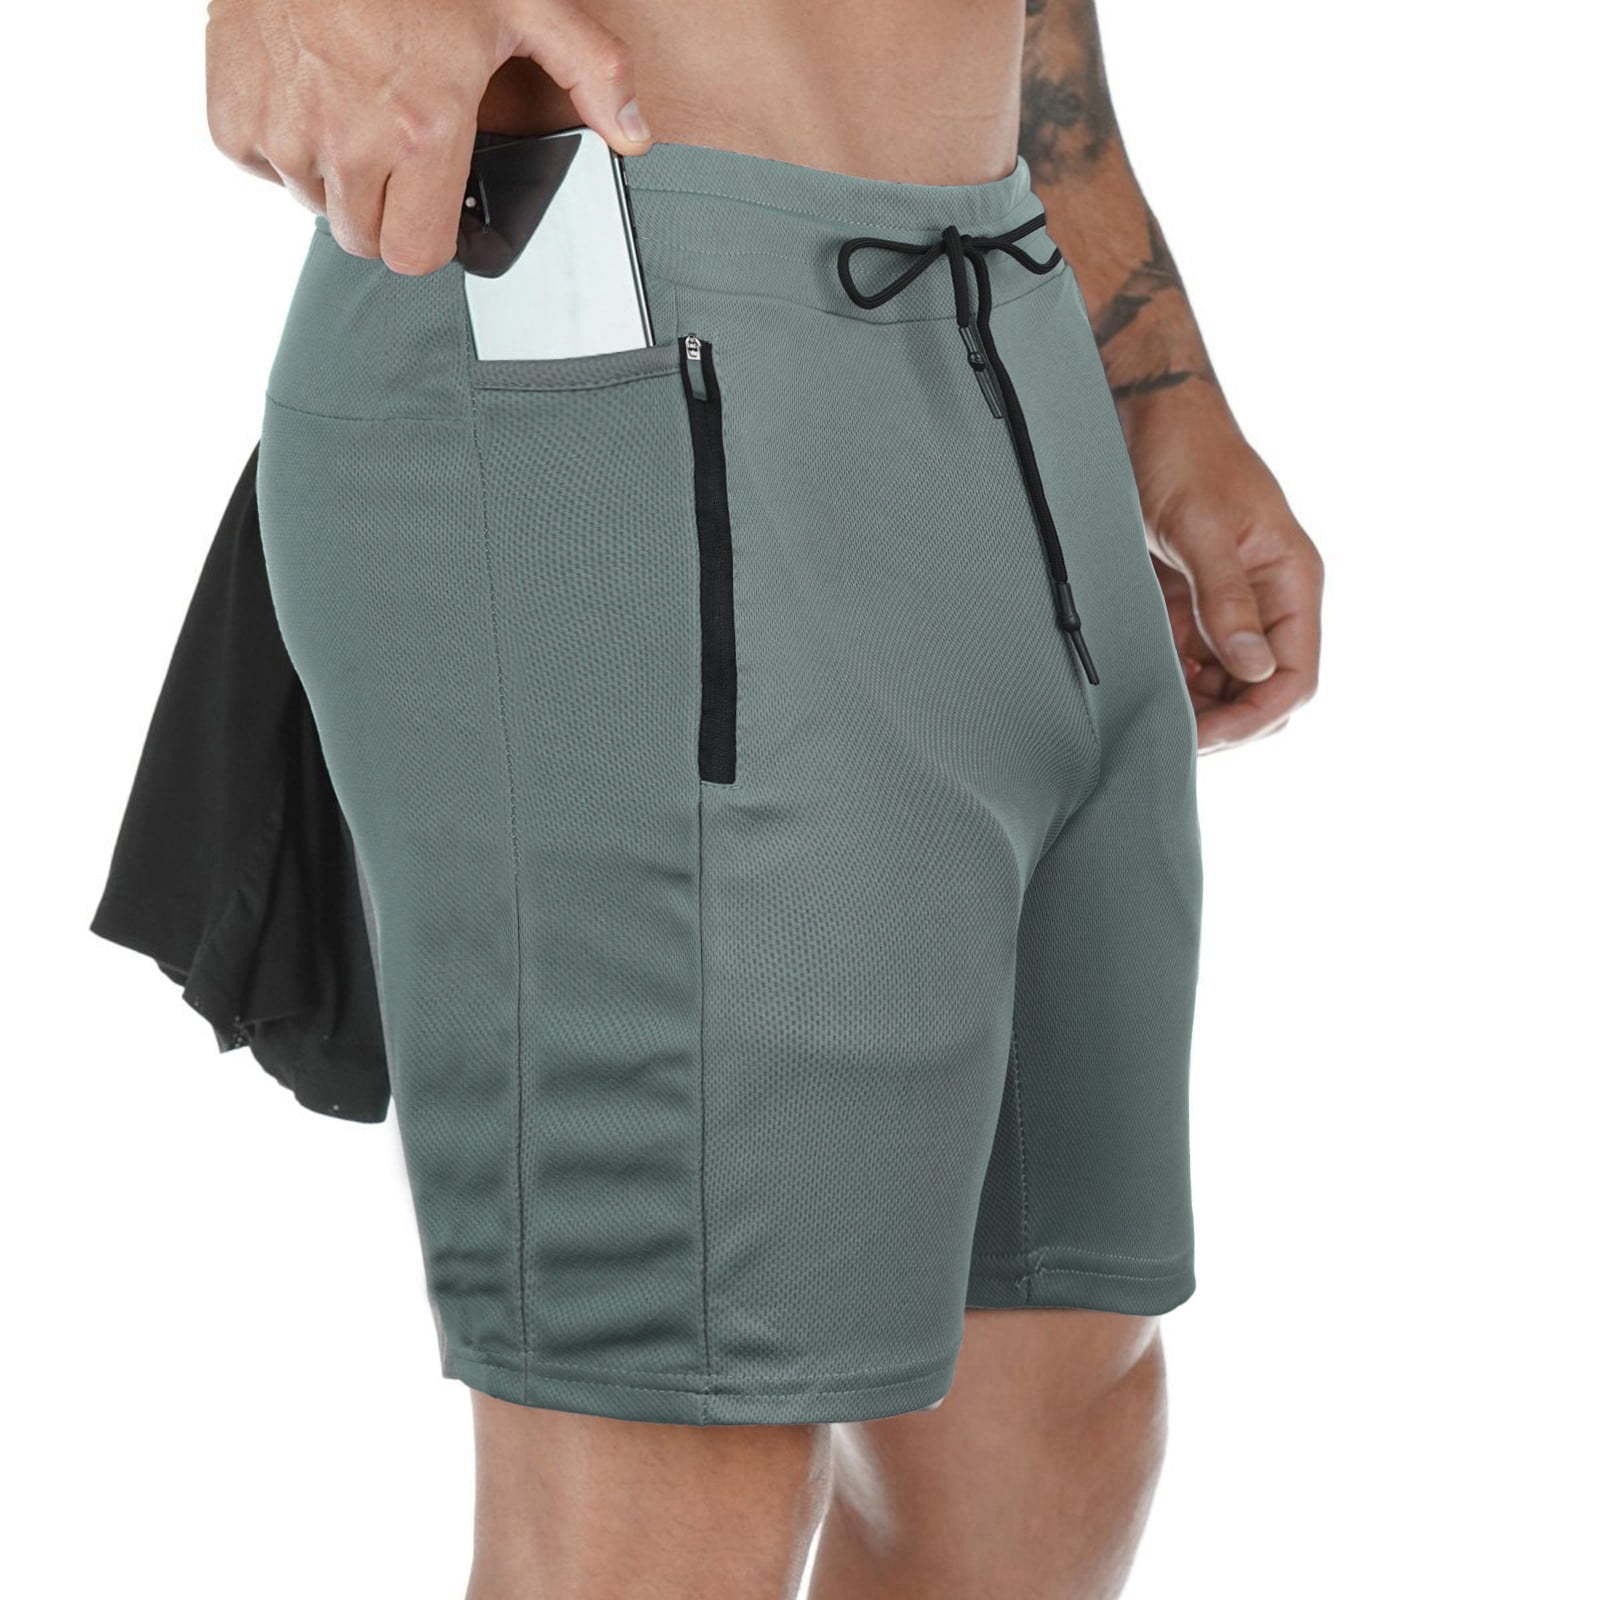 Sanbonepd Men'S Fitness Running Shorts Gym Shorts With Pockets - Walmart.com